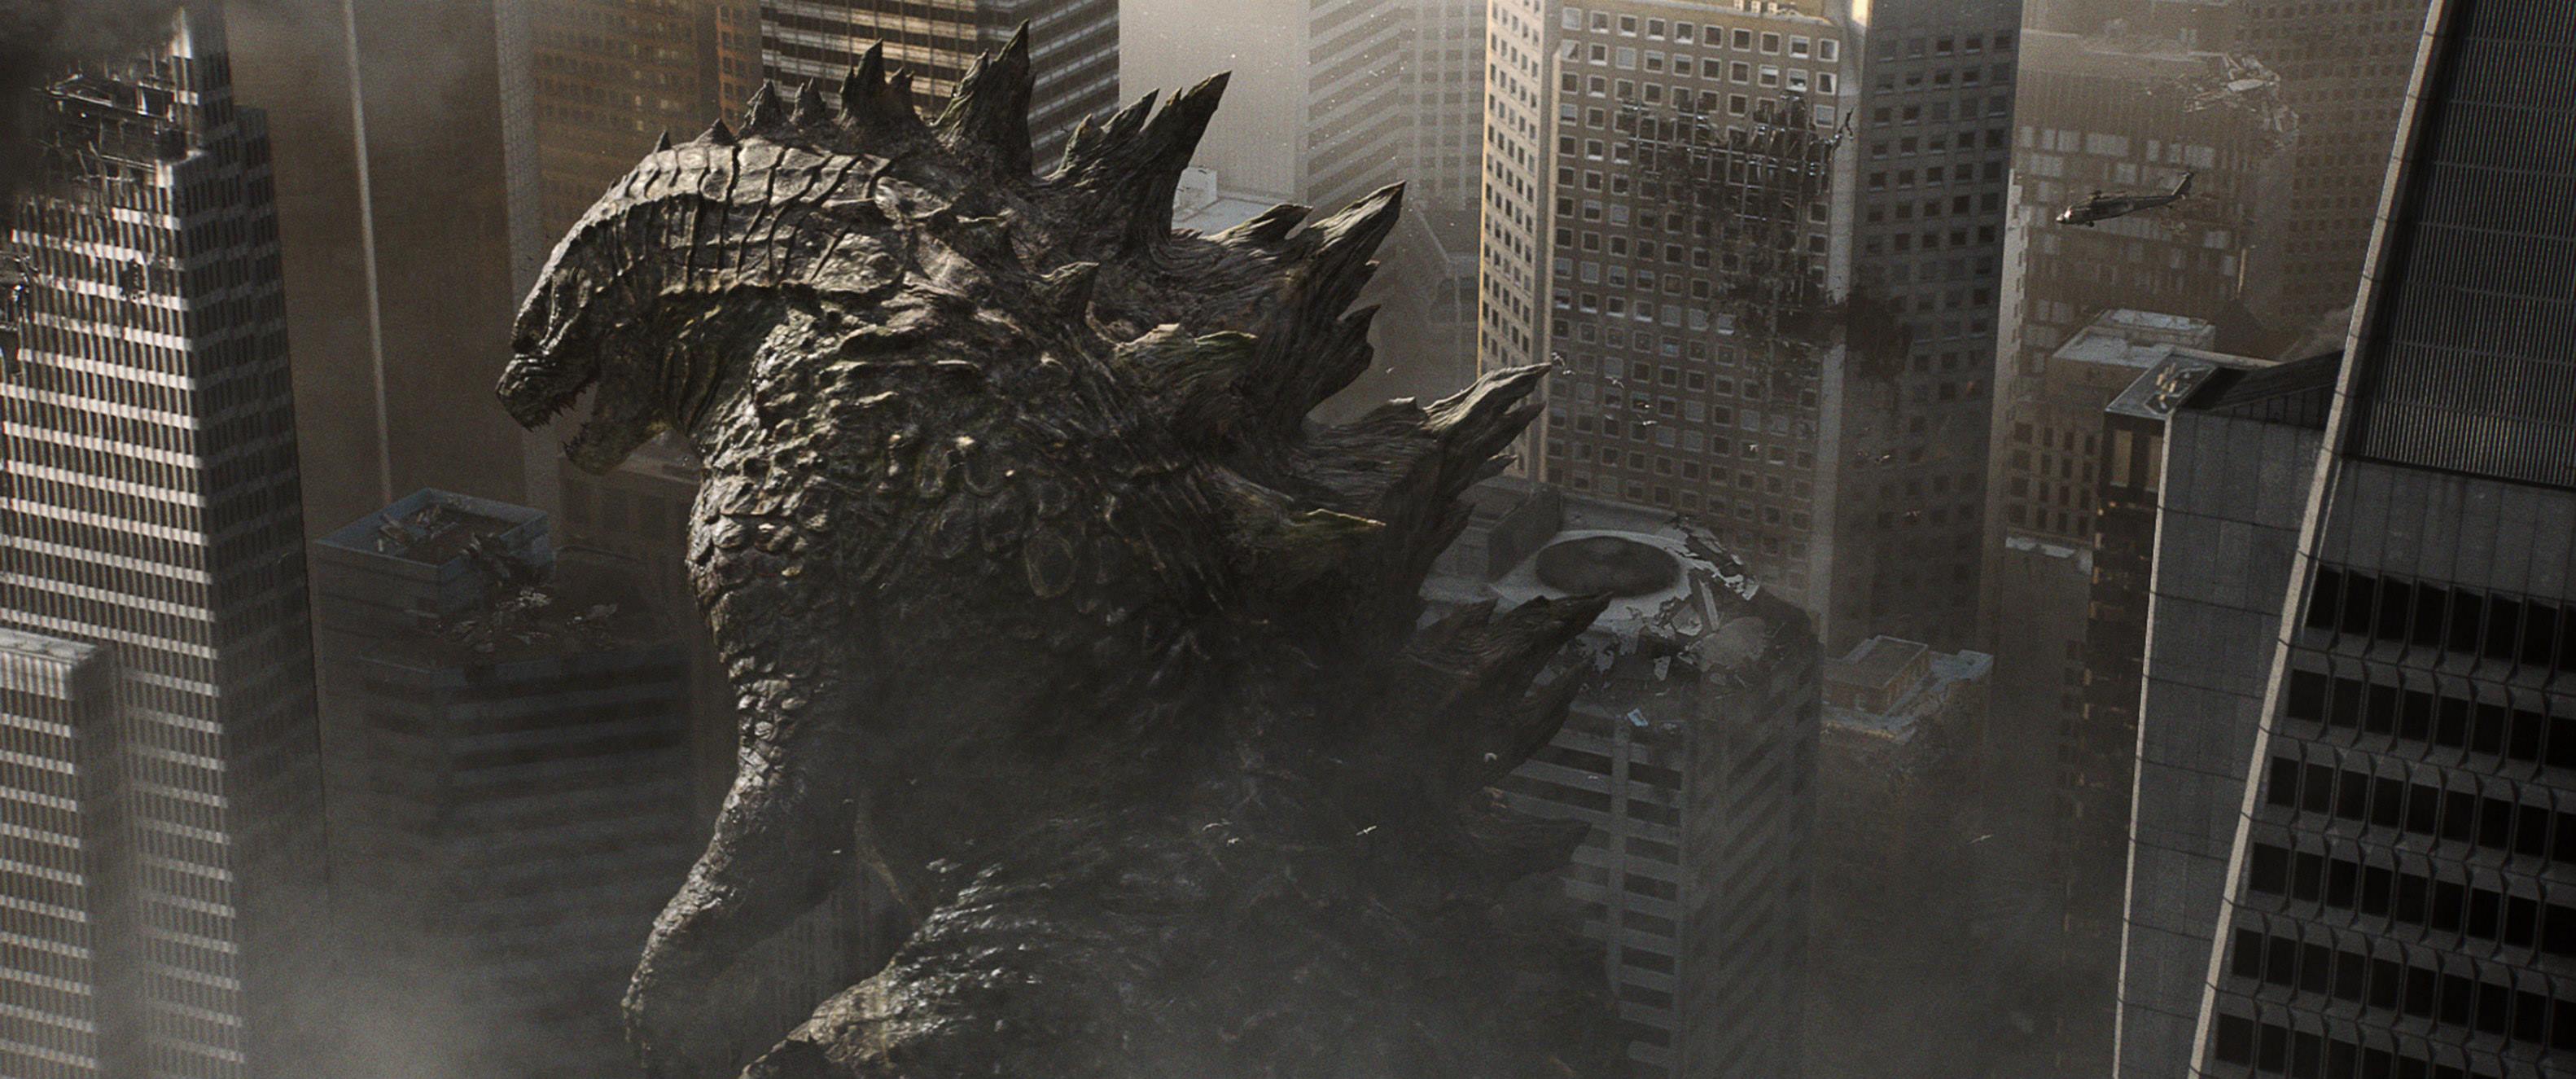 Movie Godzilla 2014 3164x1325